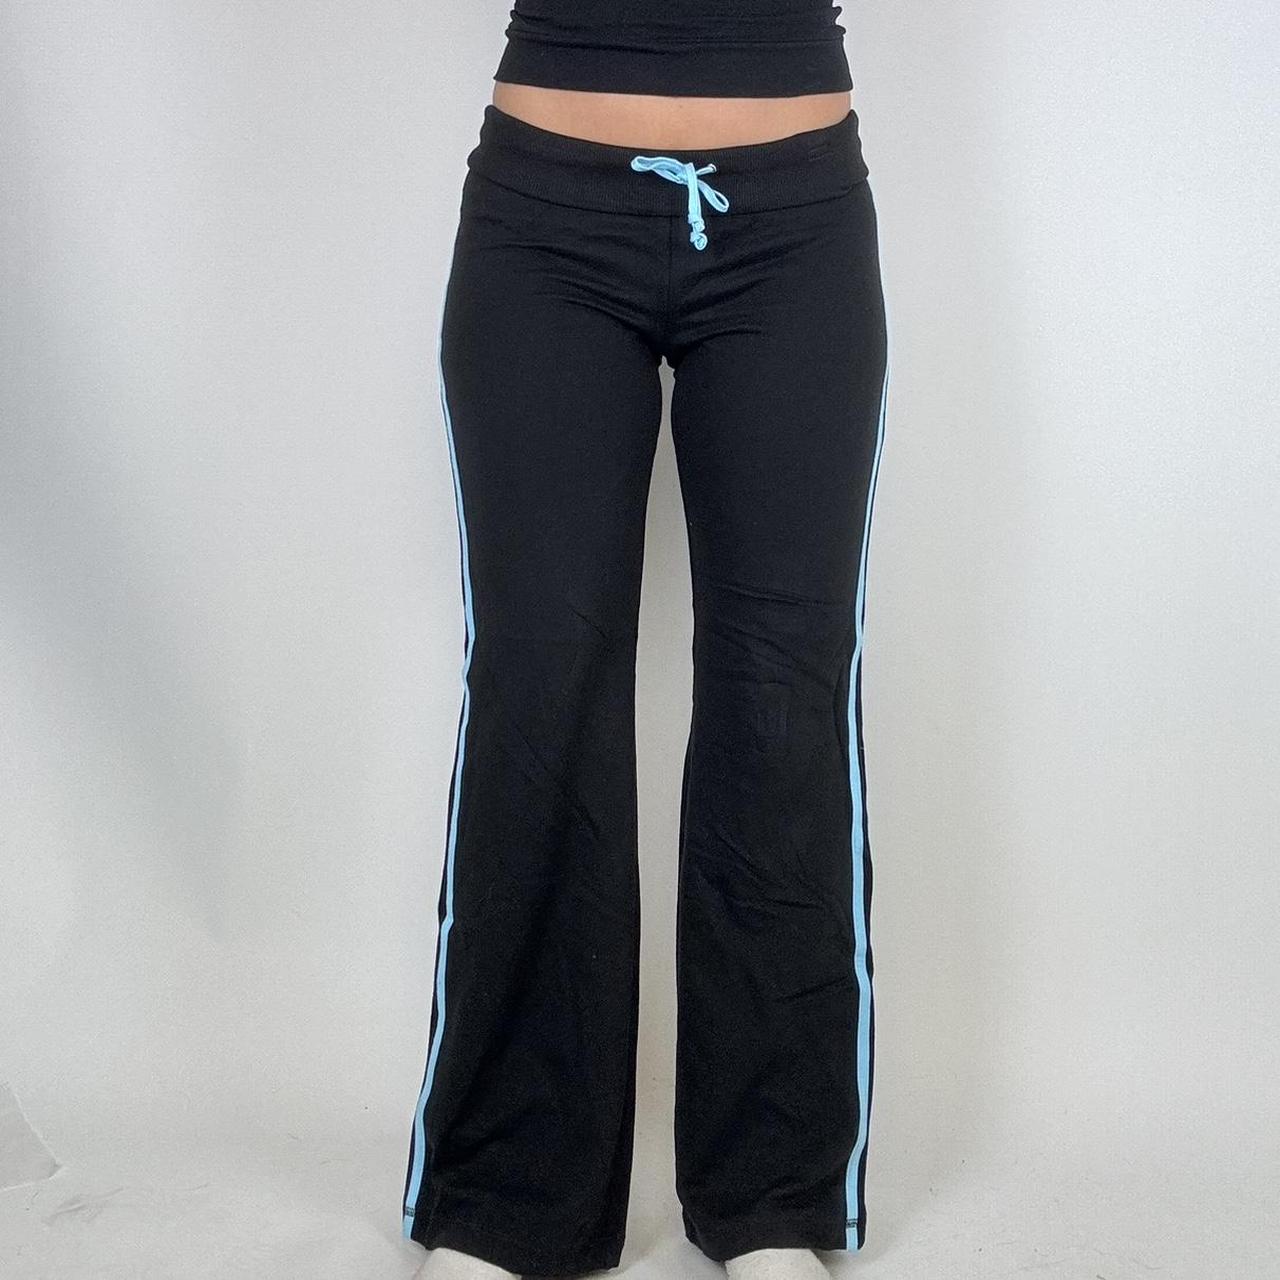 Foldover flare yoga pants. Black color. Low rise - Depop